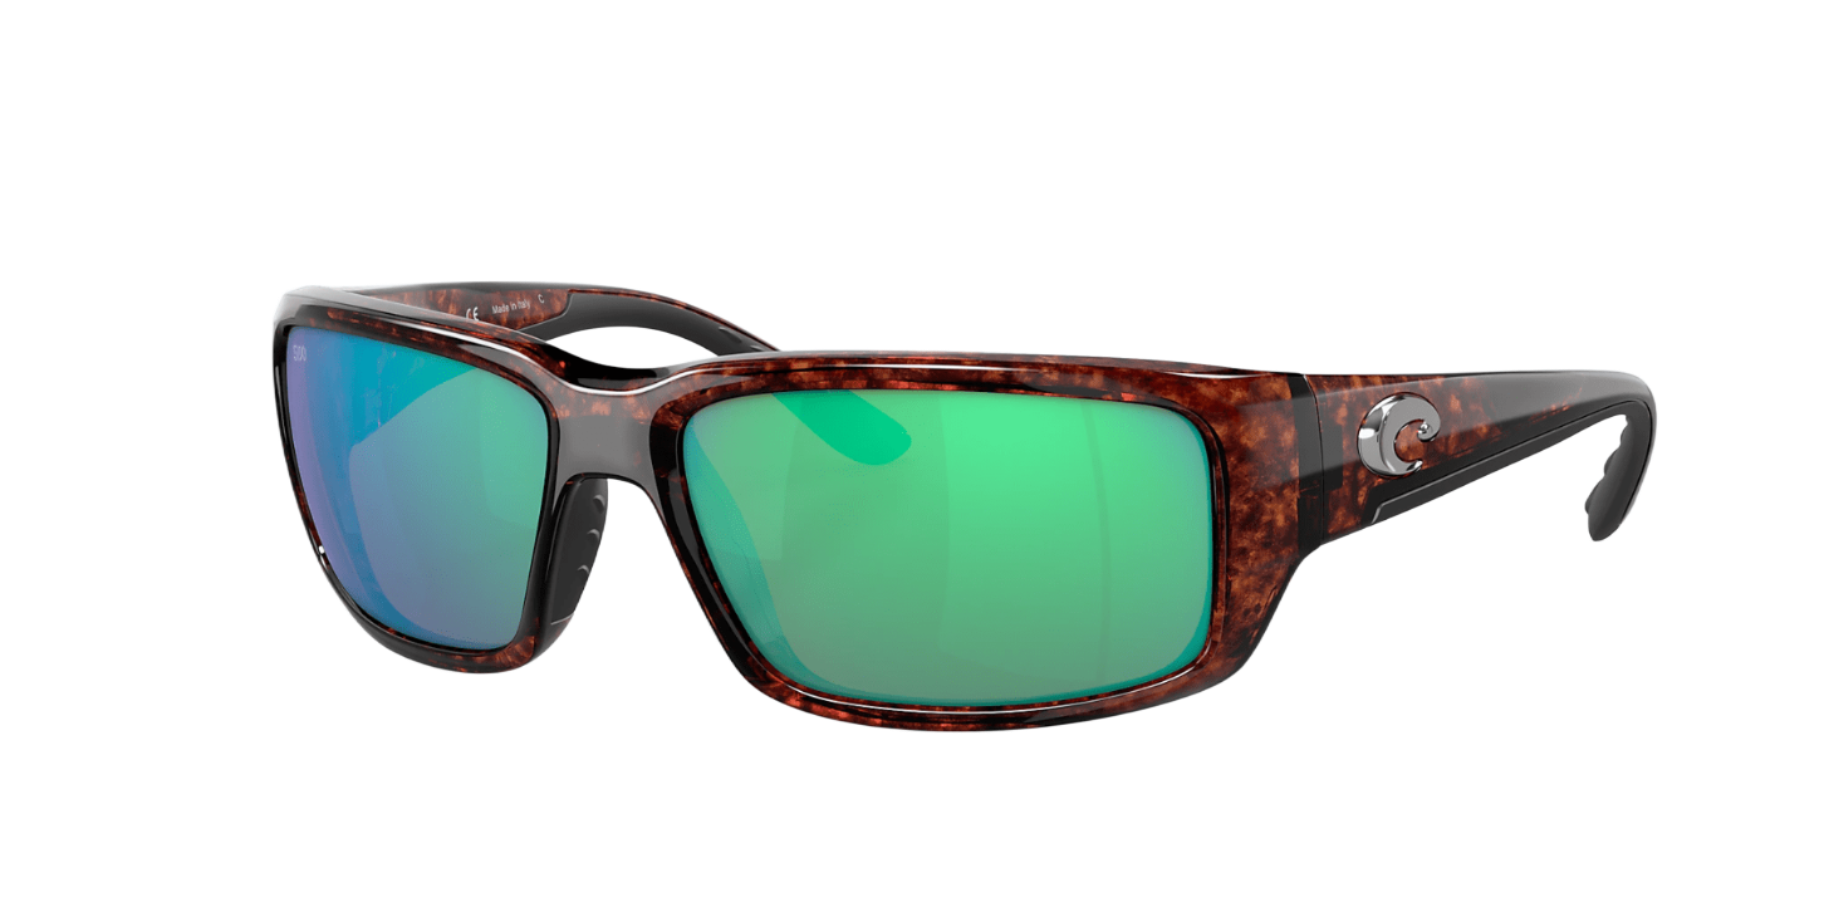 COSTA DEL MAR Sunglasses Tortoise / Green Mirror Costa Del Mar Fantail Tortoise Frame/Green Mirror Lens Sunglasses